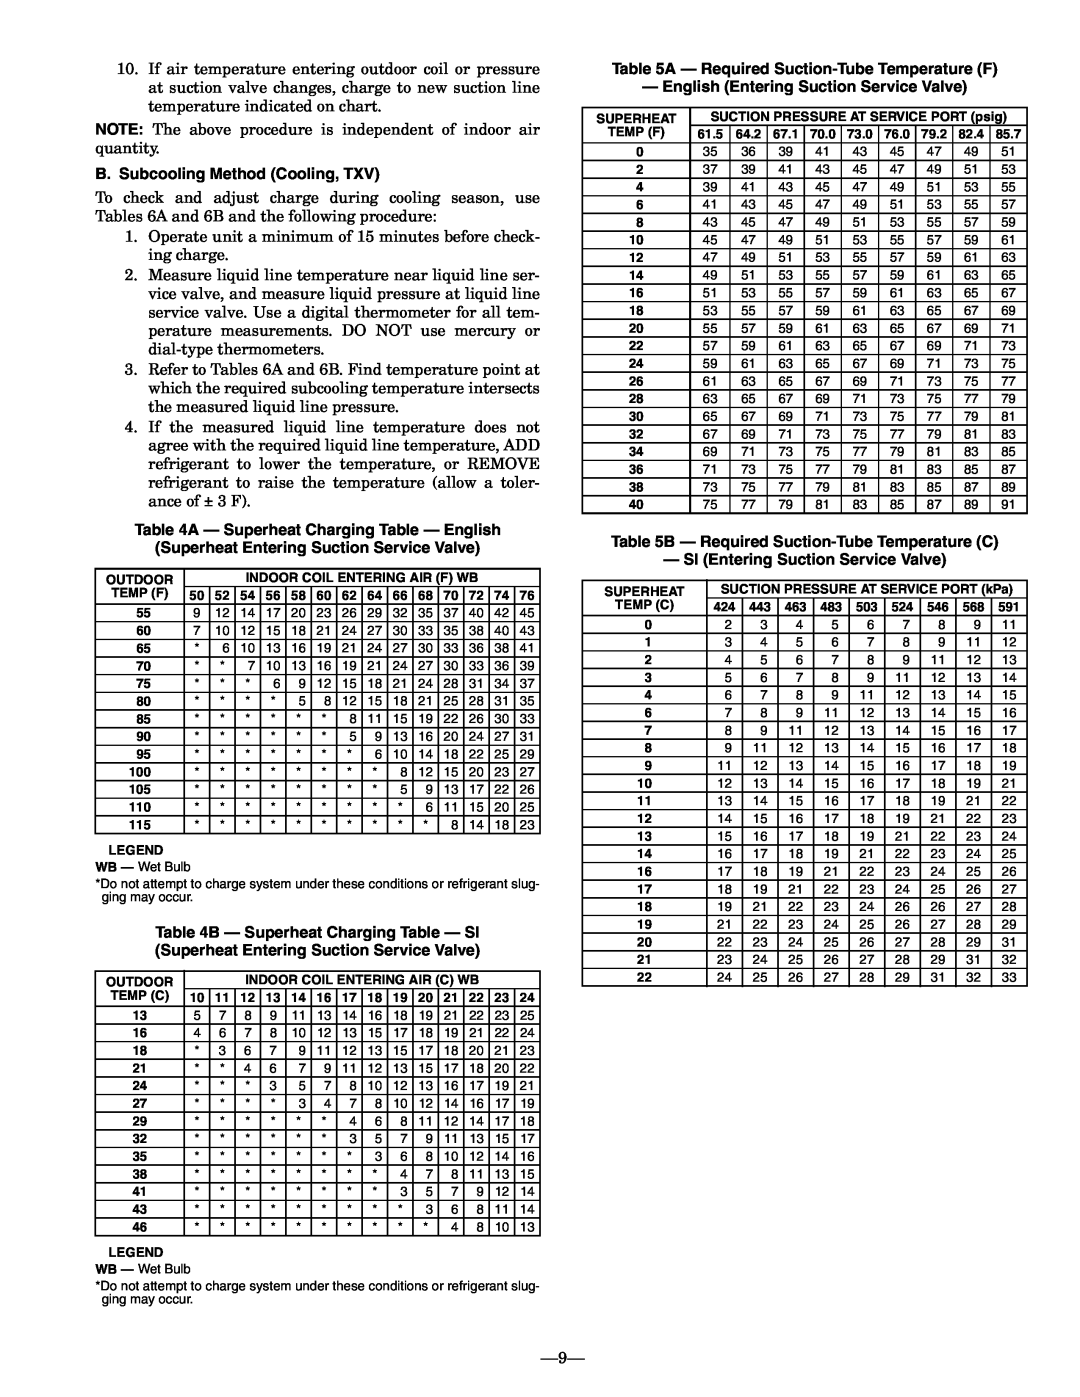 Bryant 538J-18-1 manual B. Subcooling Method Cooling, TXV, A - Superheat Charging Table - English 